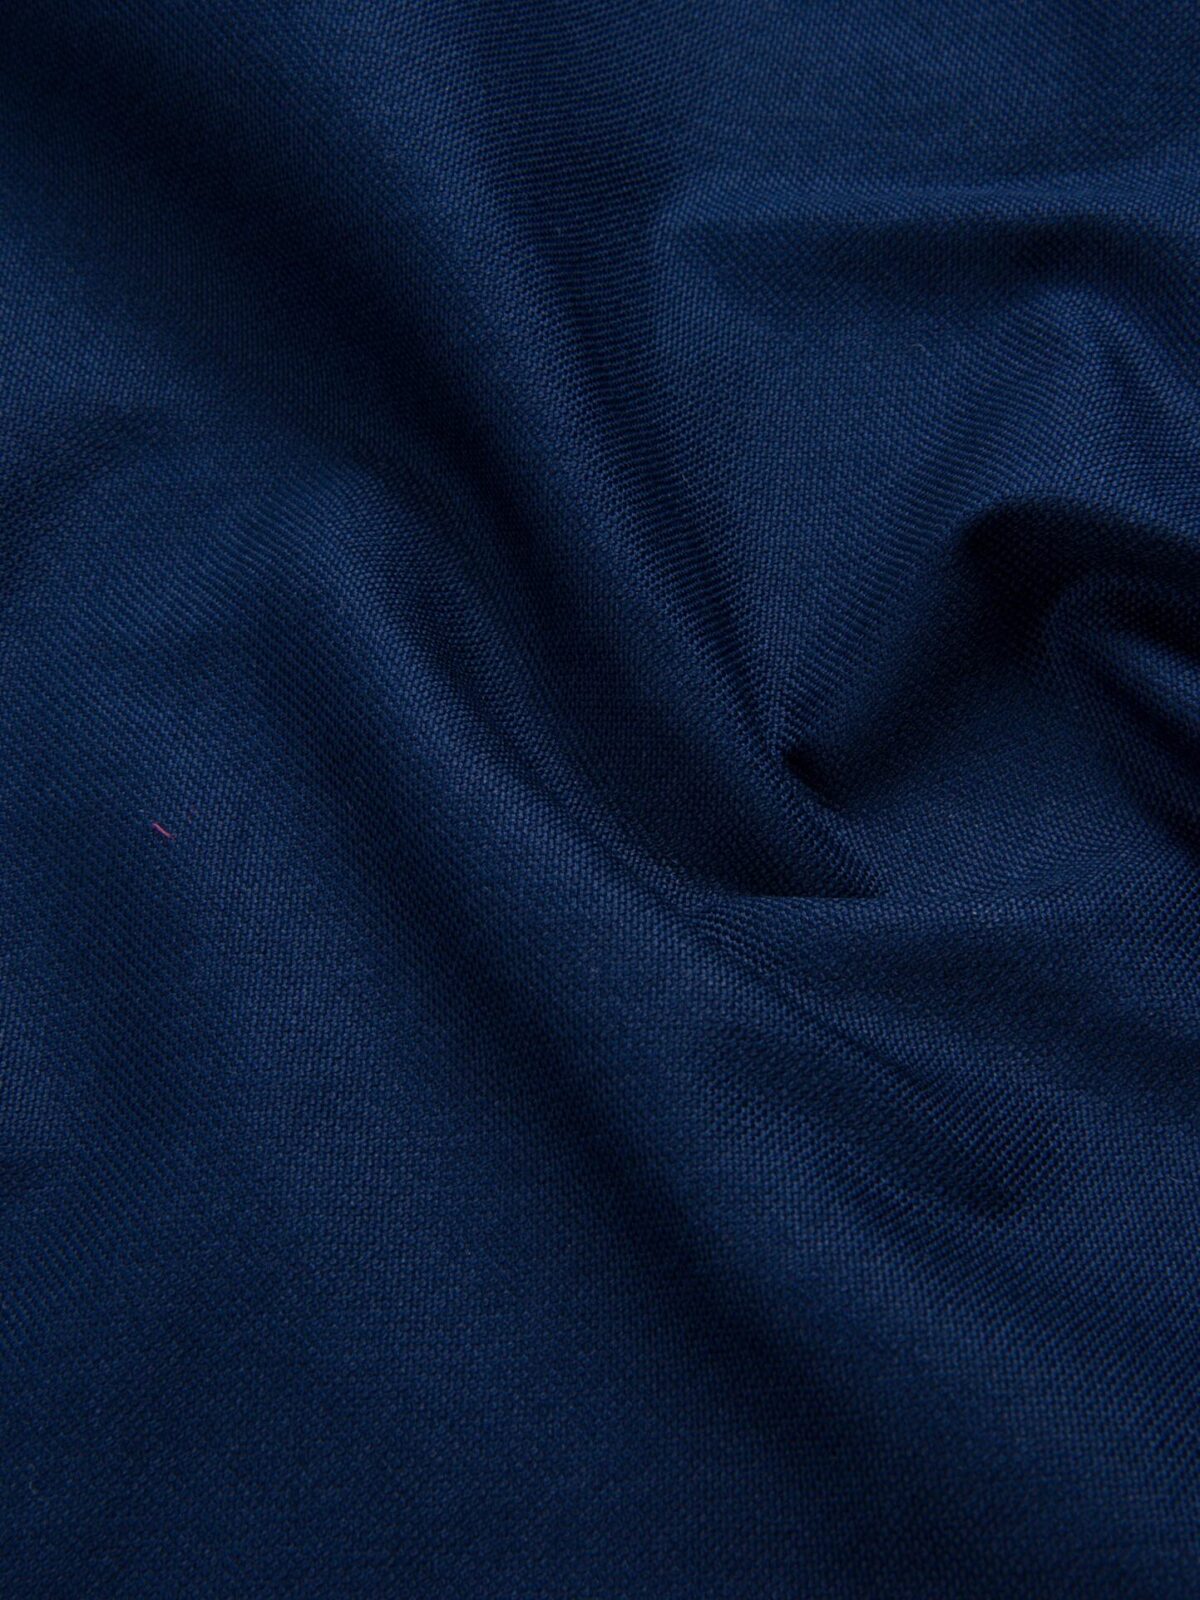 Cisco Navy Blue Velour Jacket